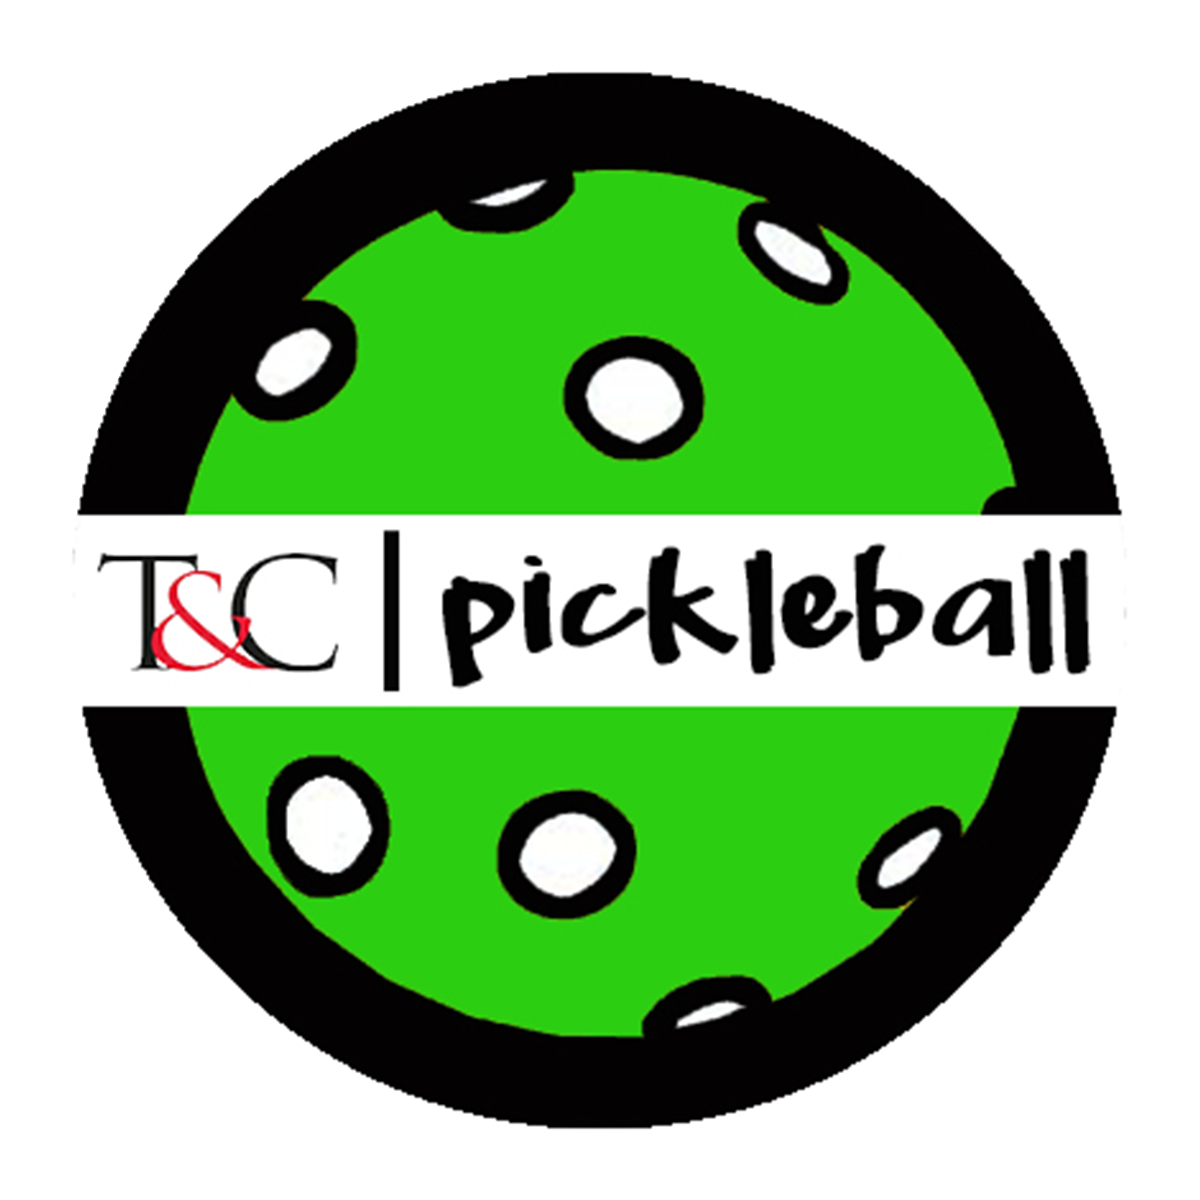 Pickleball Clipart Images / Pickleball Clip Art - Royalty Free